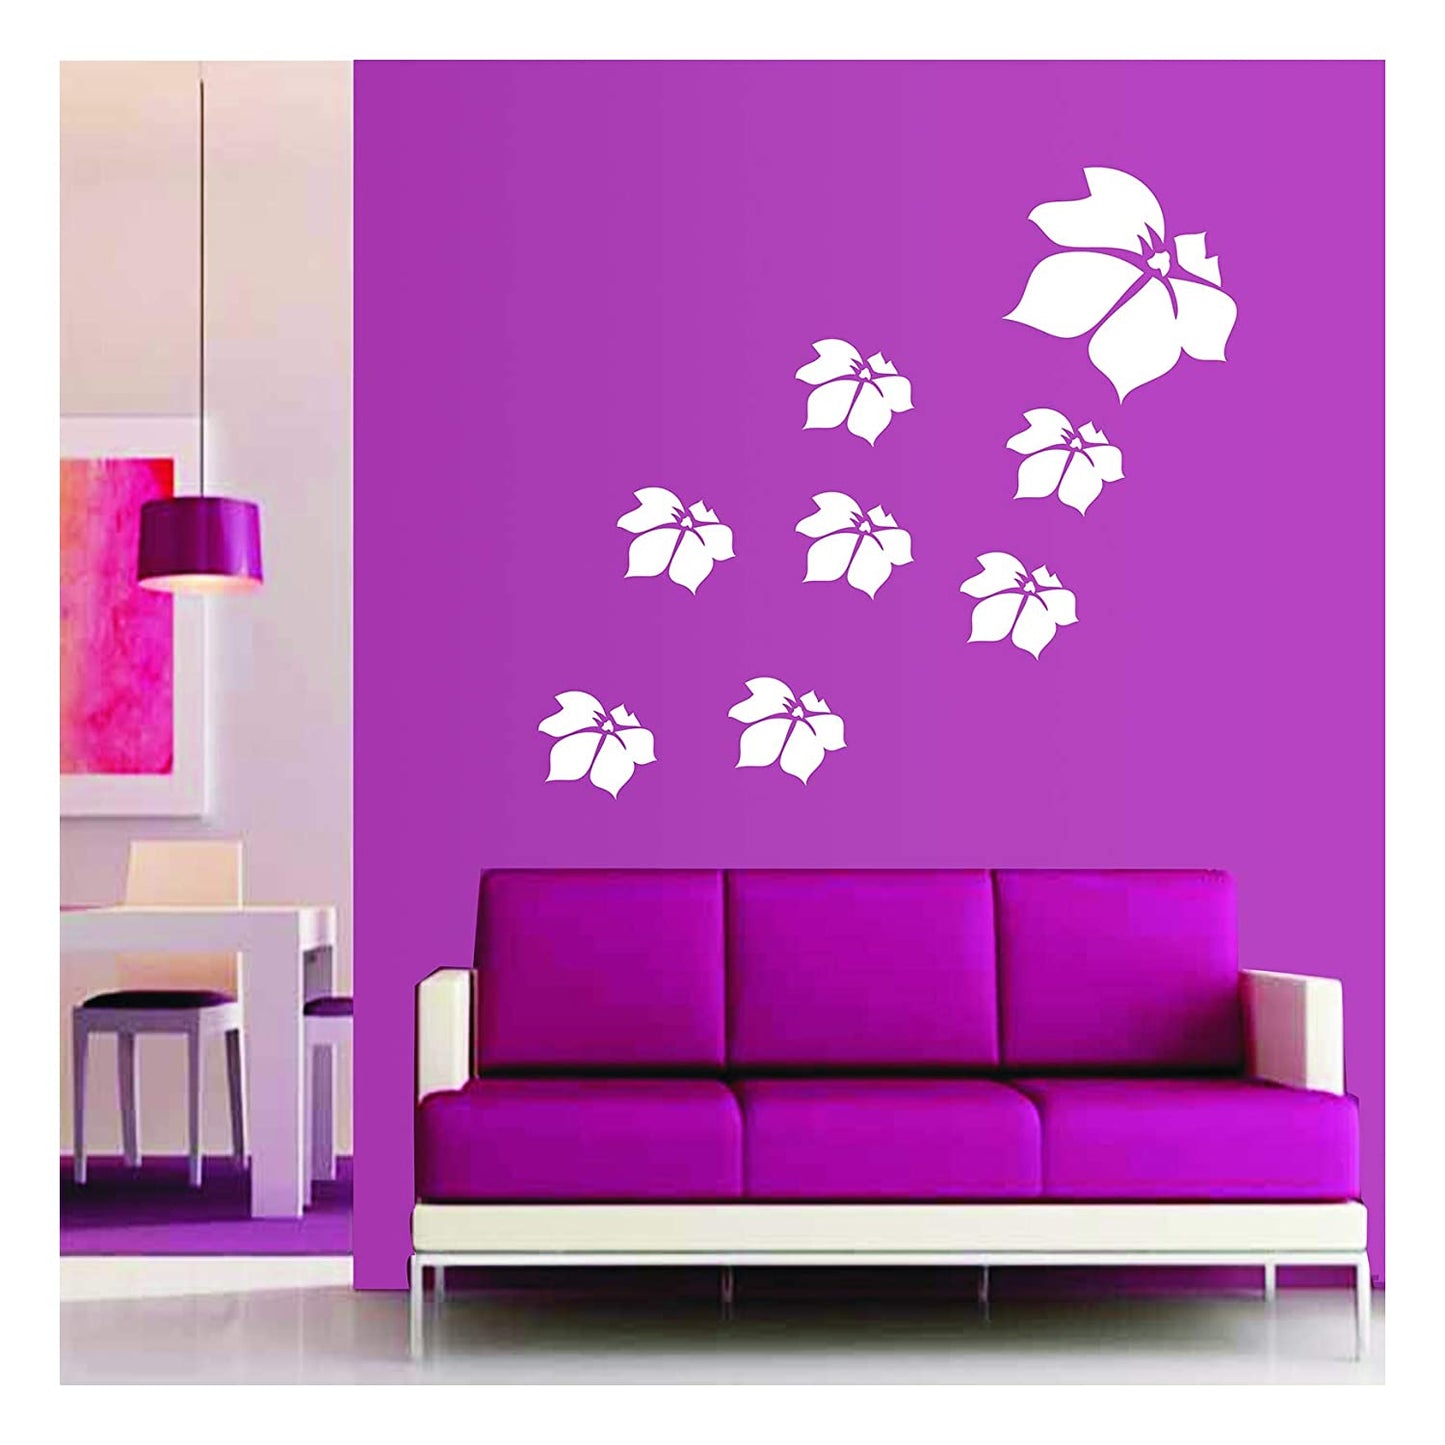 Floral Wall Design Stencil (KHSNT218)